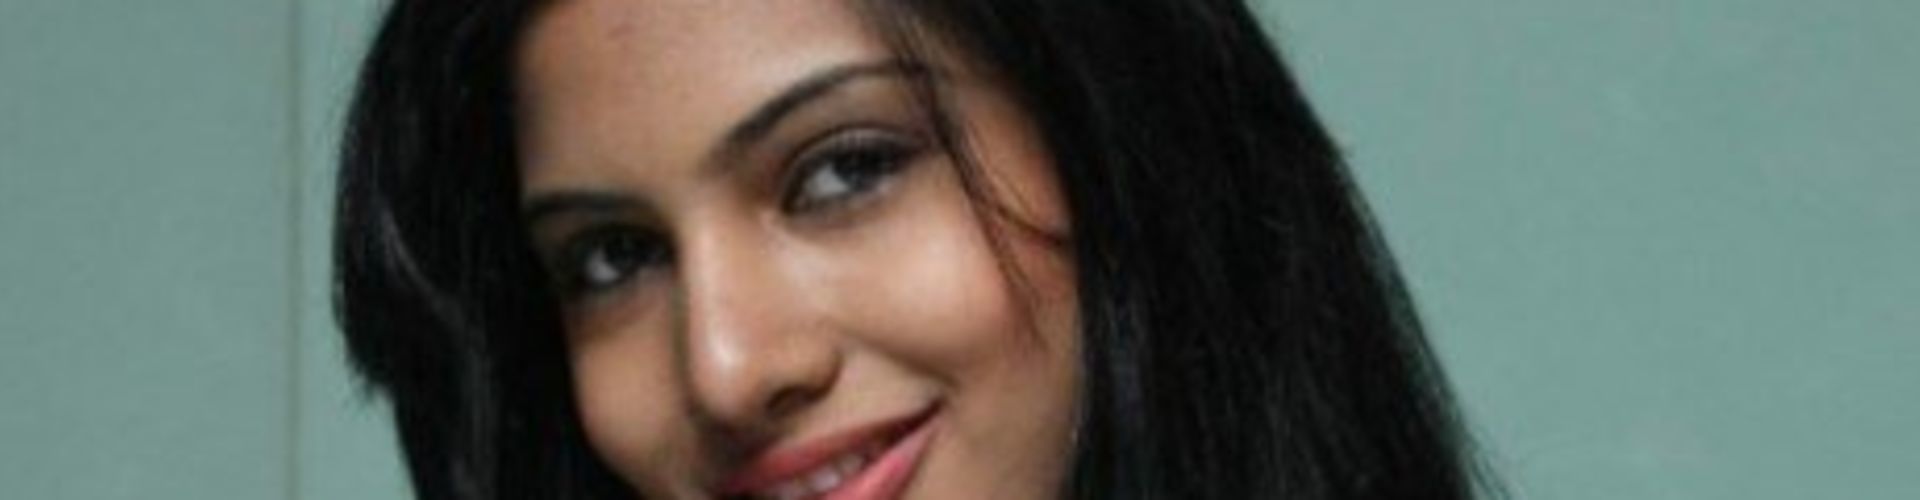 Avani Modi next will be seen in social drama ‘Rathiya’